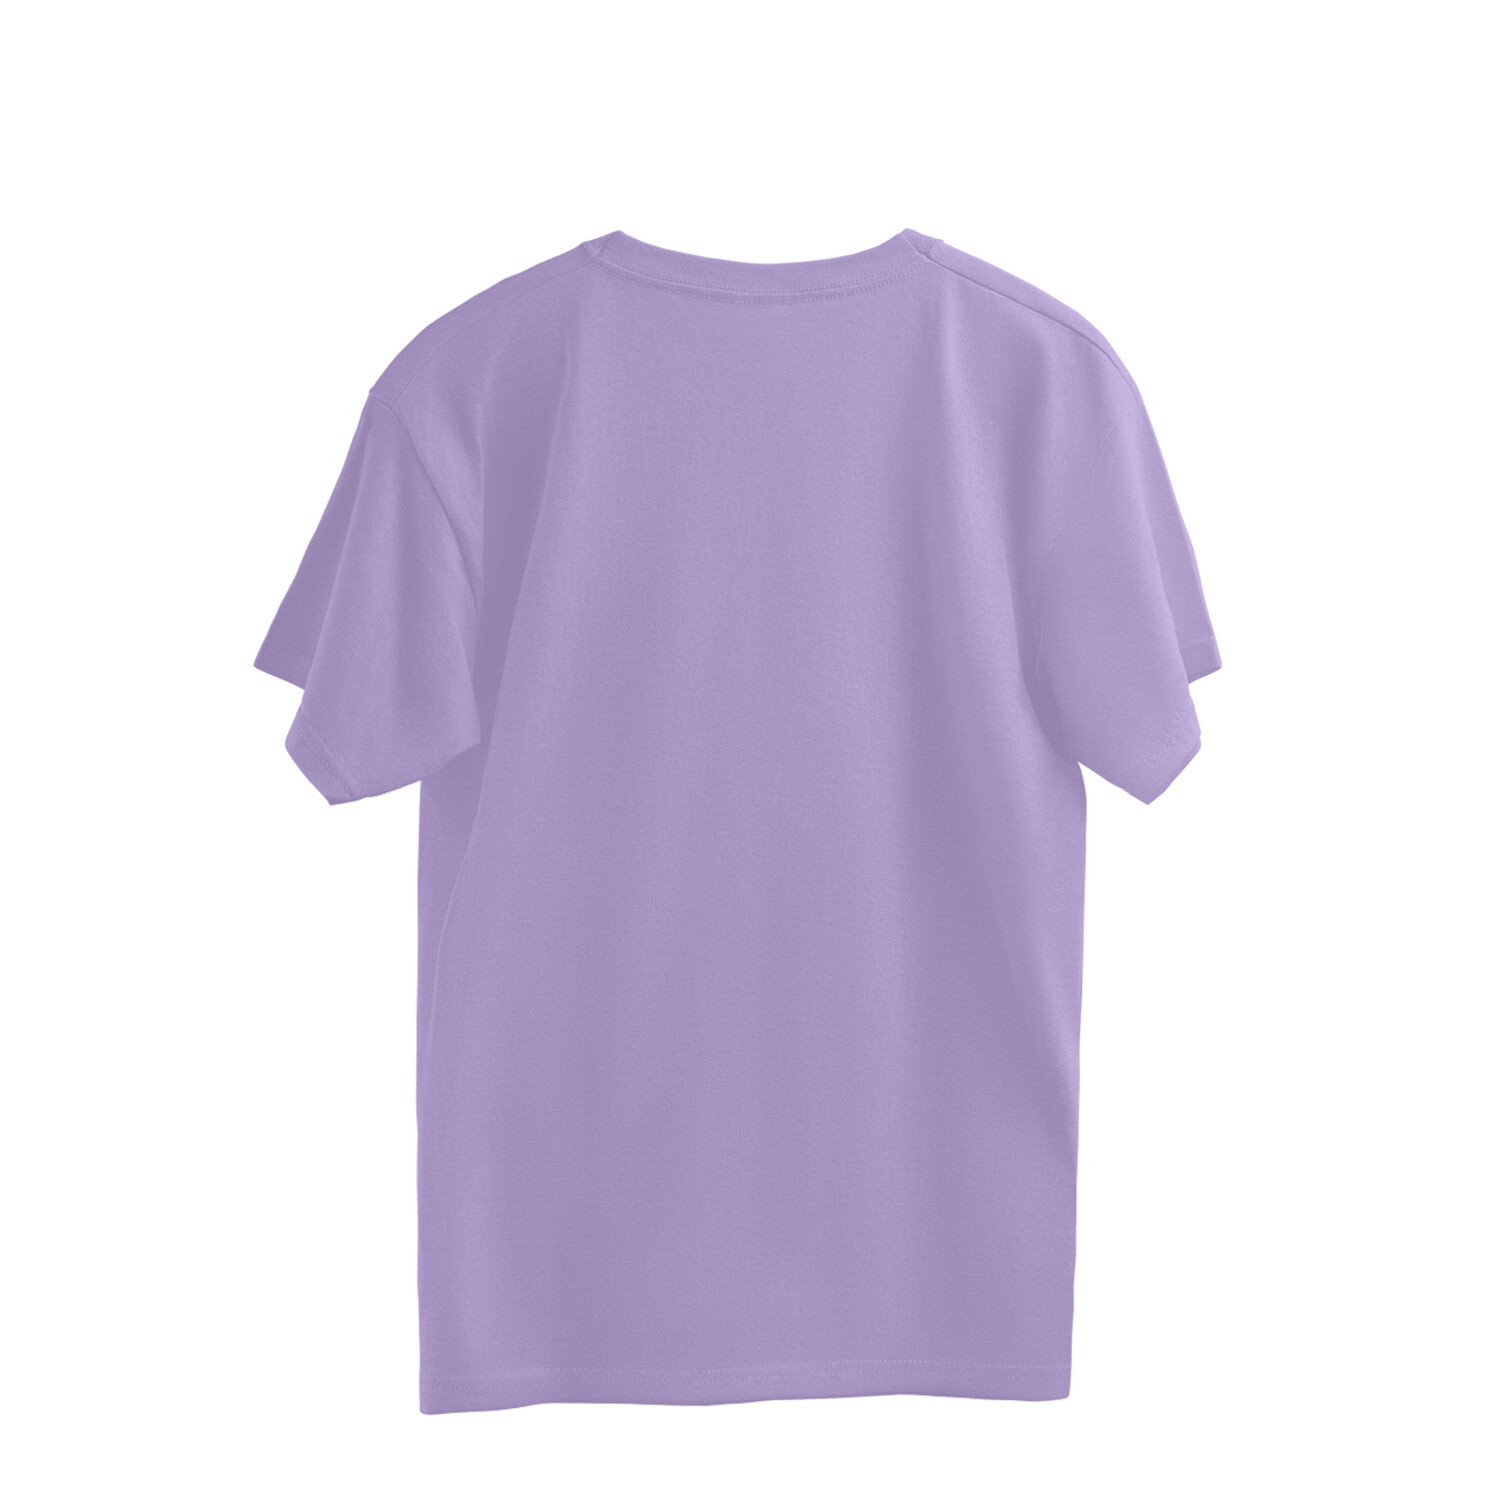 Men's Iris Lavender Over-Sized T-shirt